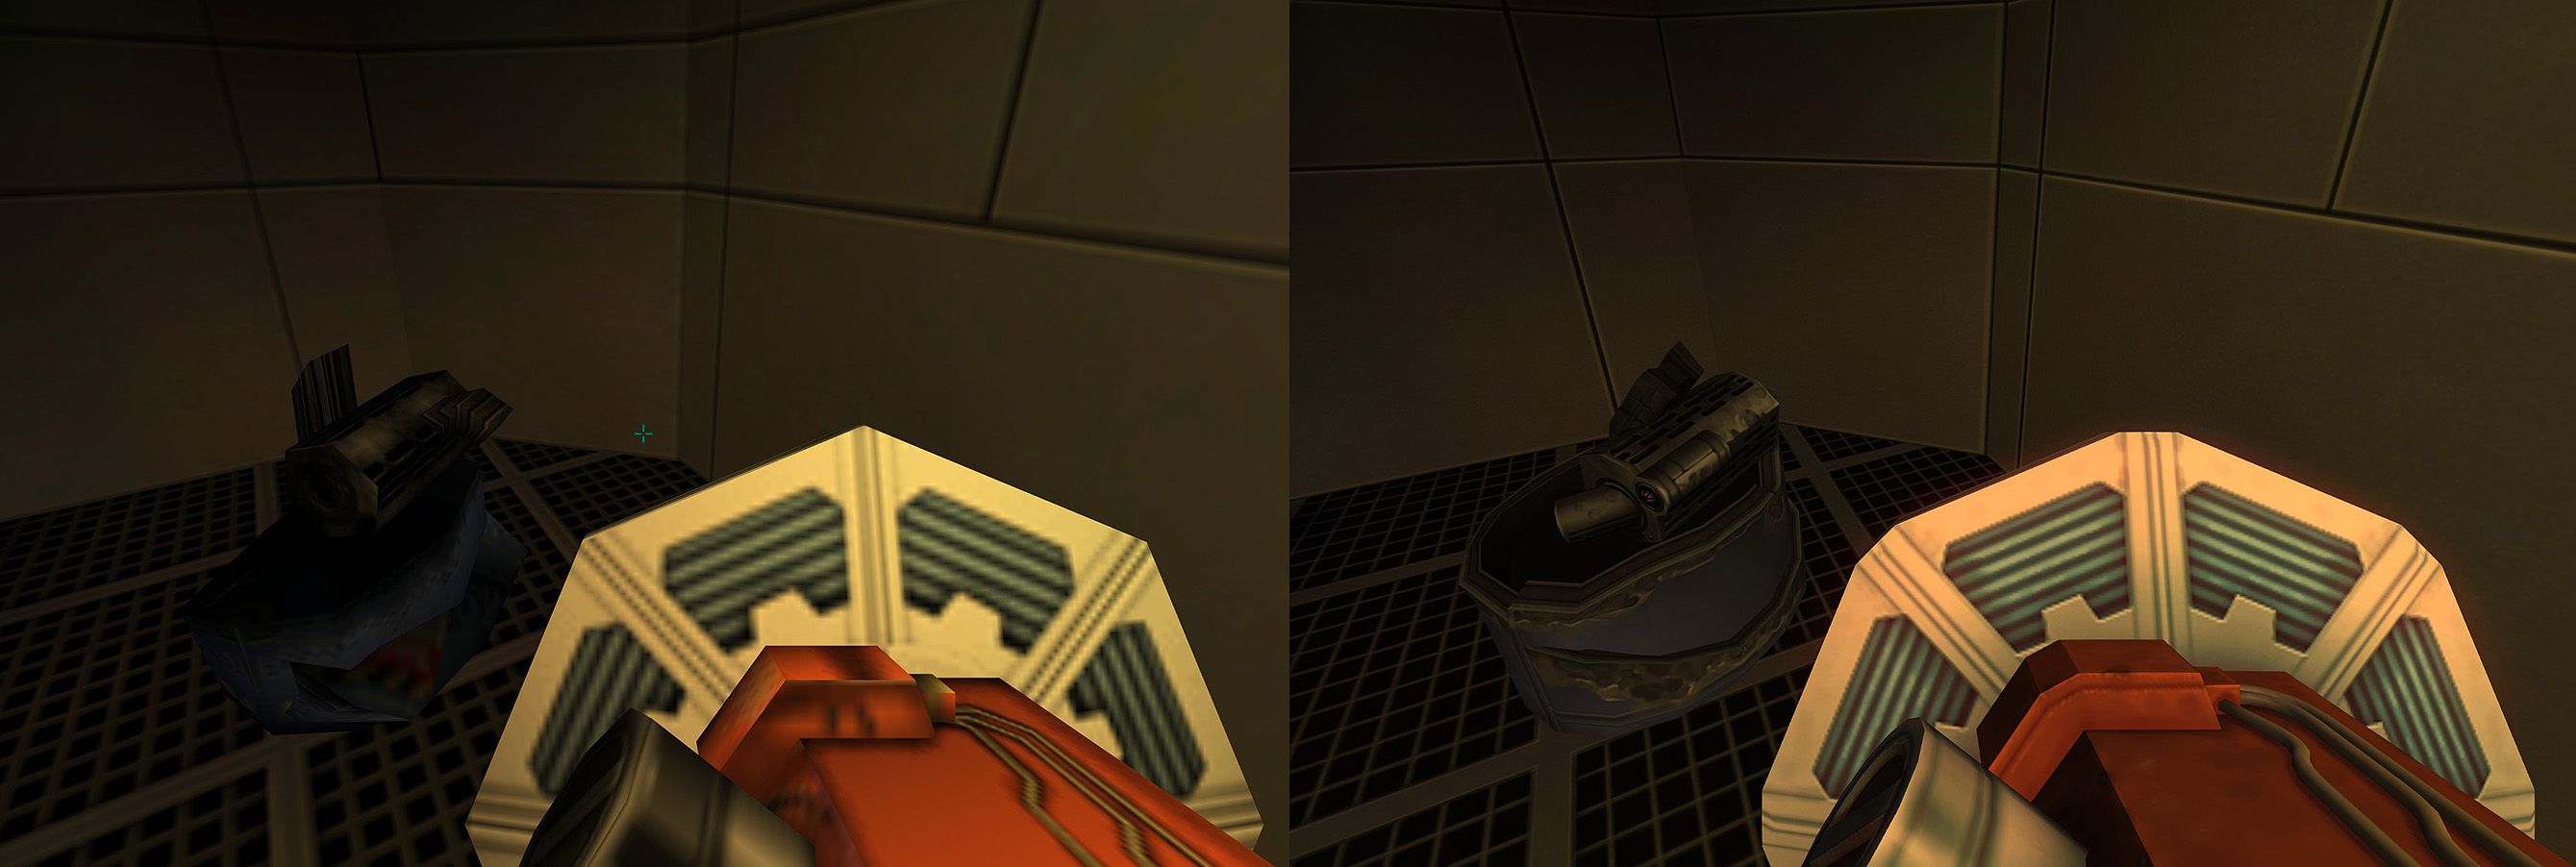 Сравнение оригинала (слева) и ремастера (справа). Источник: PC Gamer